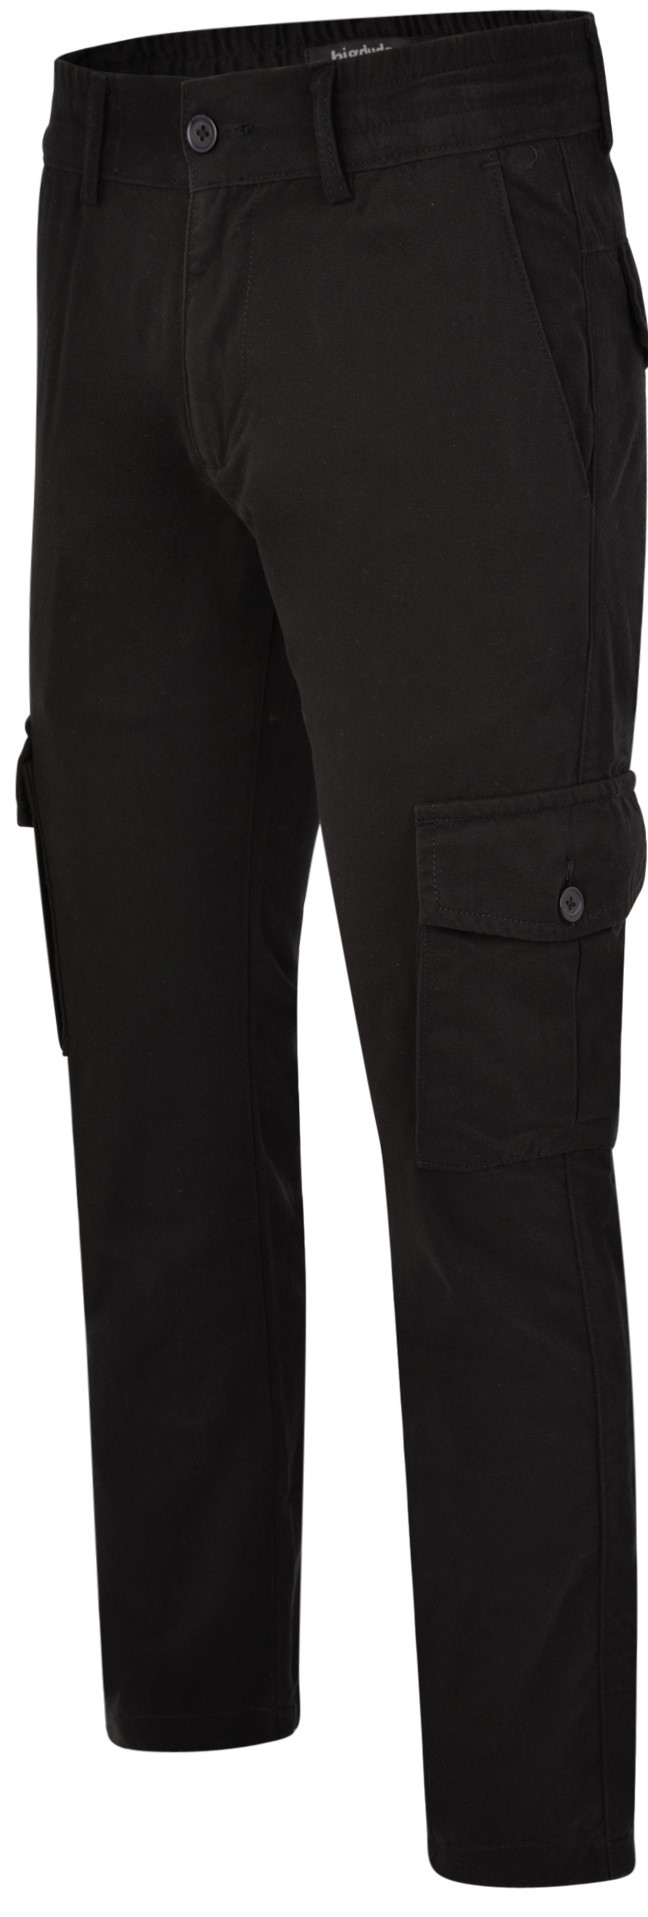 SIKSILK LOOSE FIT PANTS  Cargo trousers  black  Zalandocouk